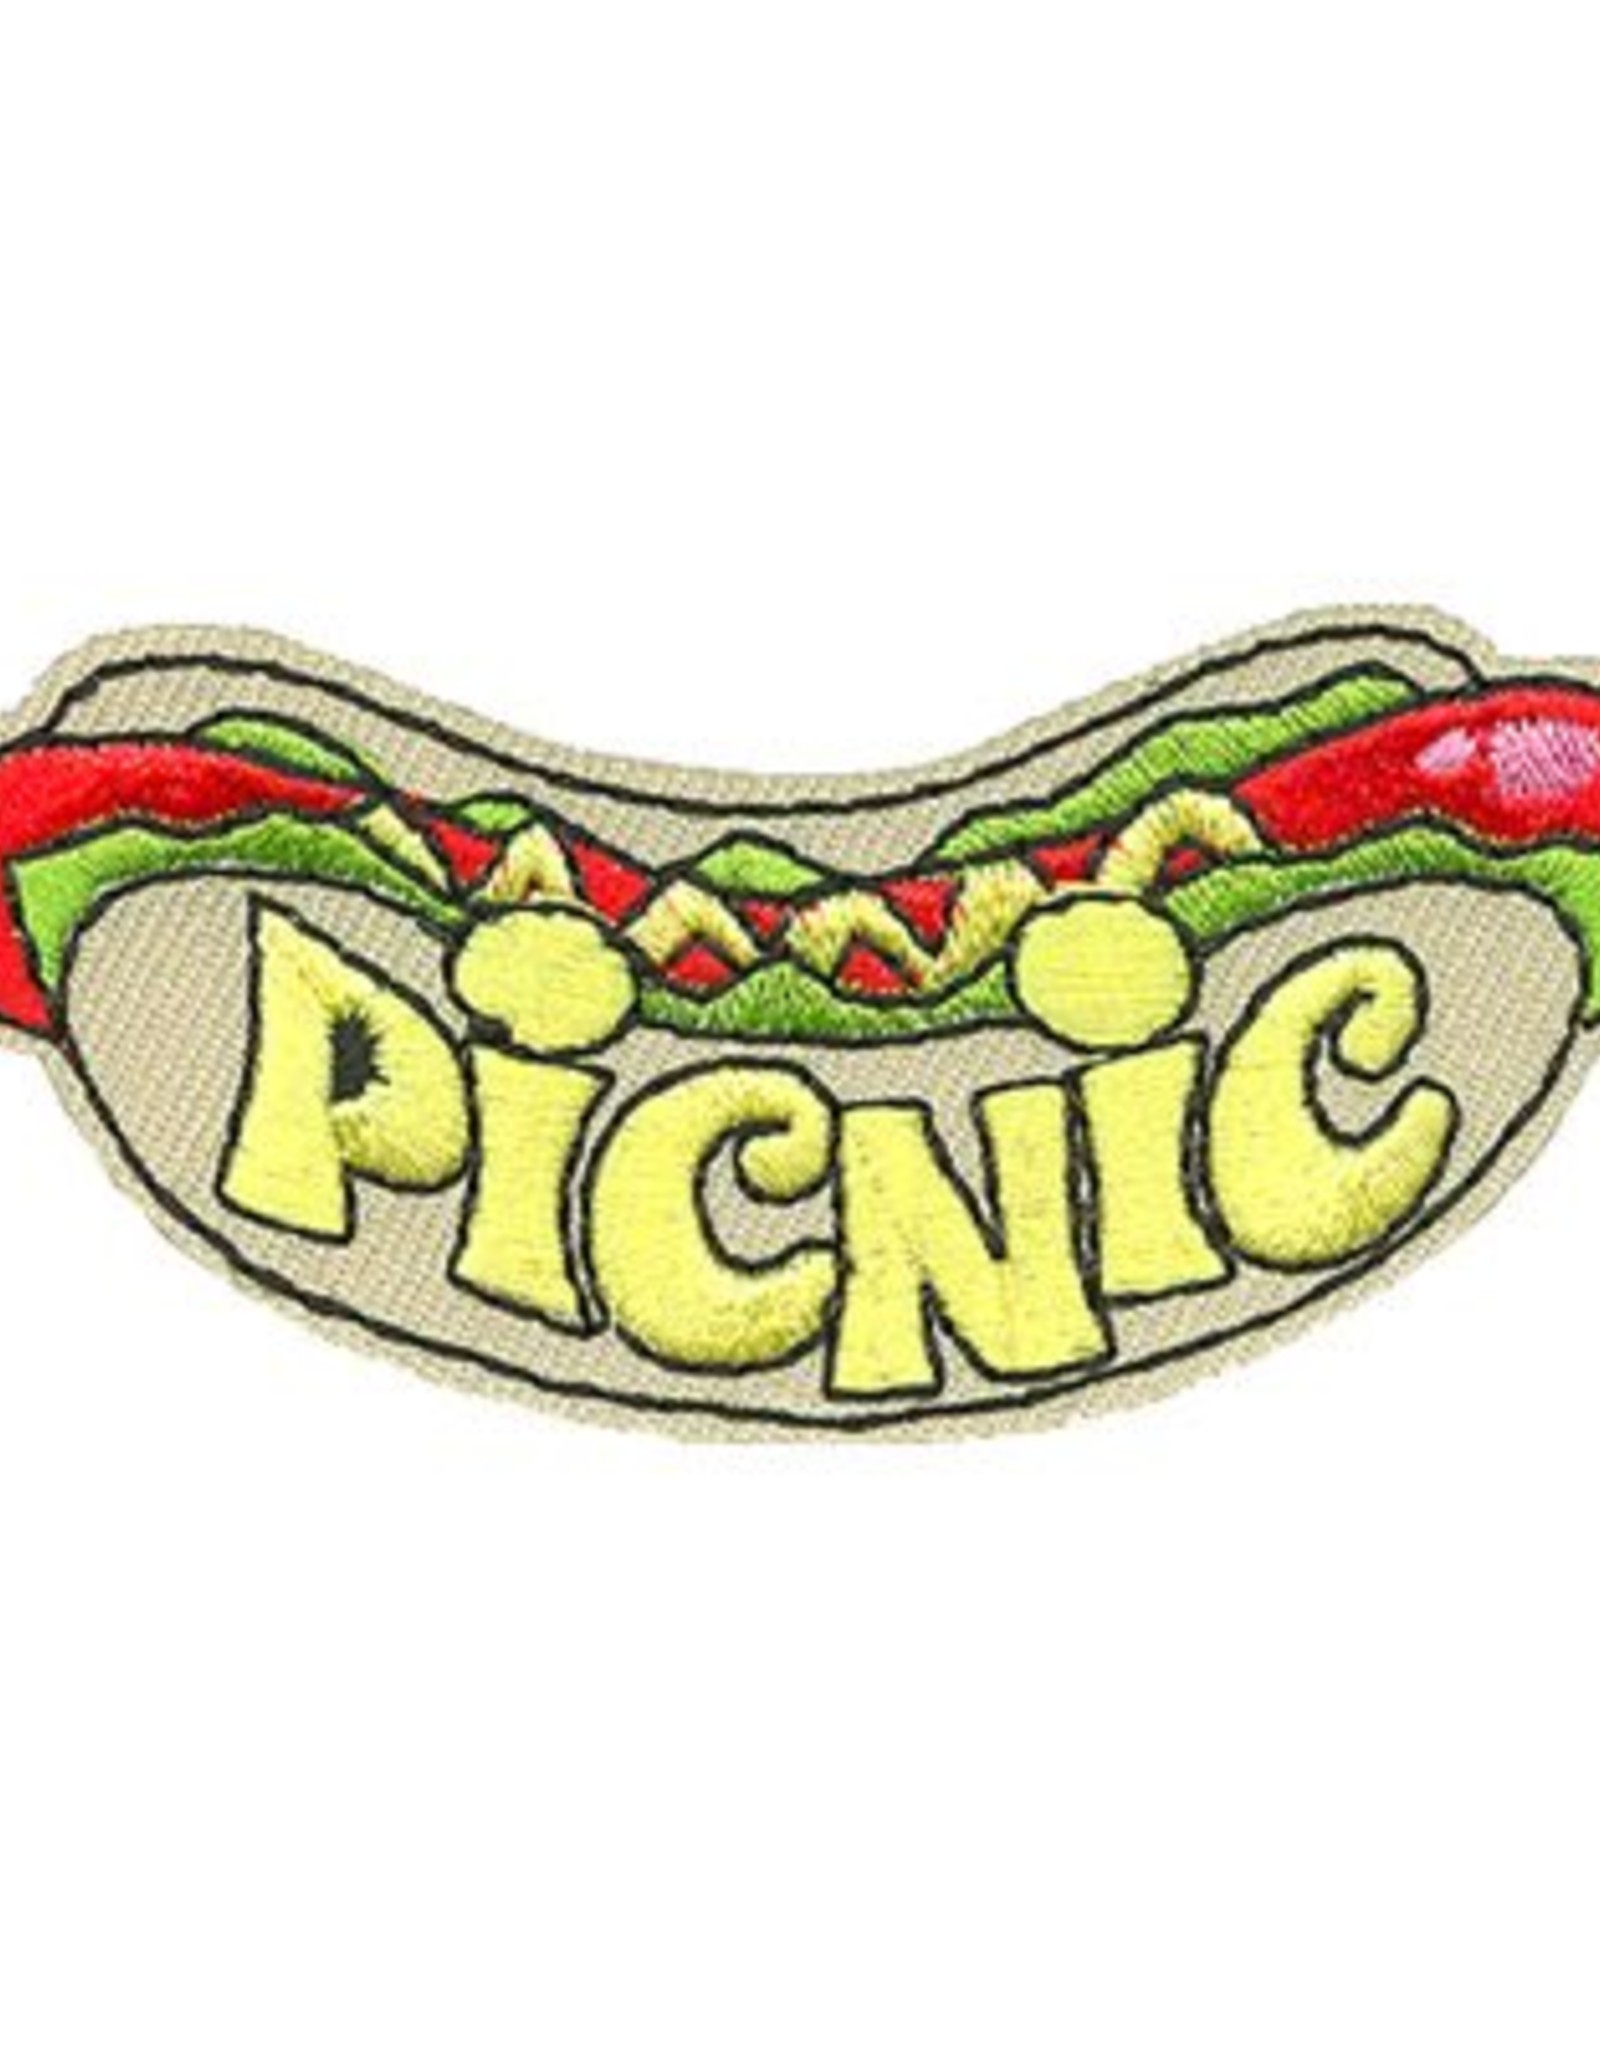 *Picnic Hot Dog Fun Patch